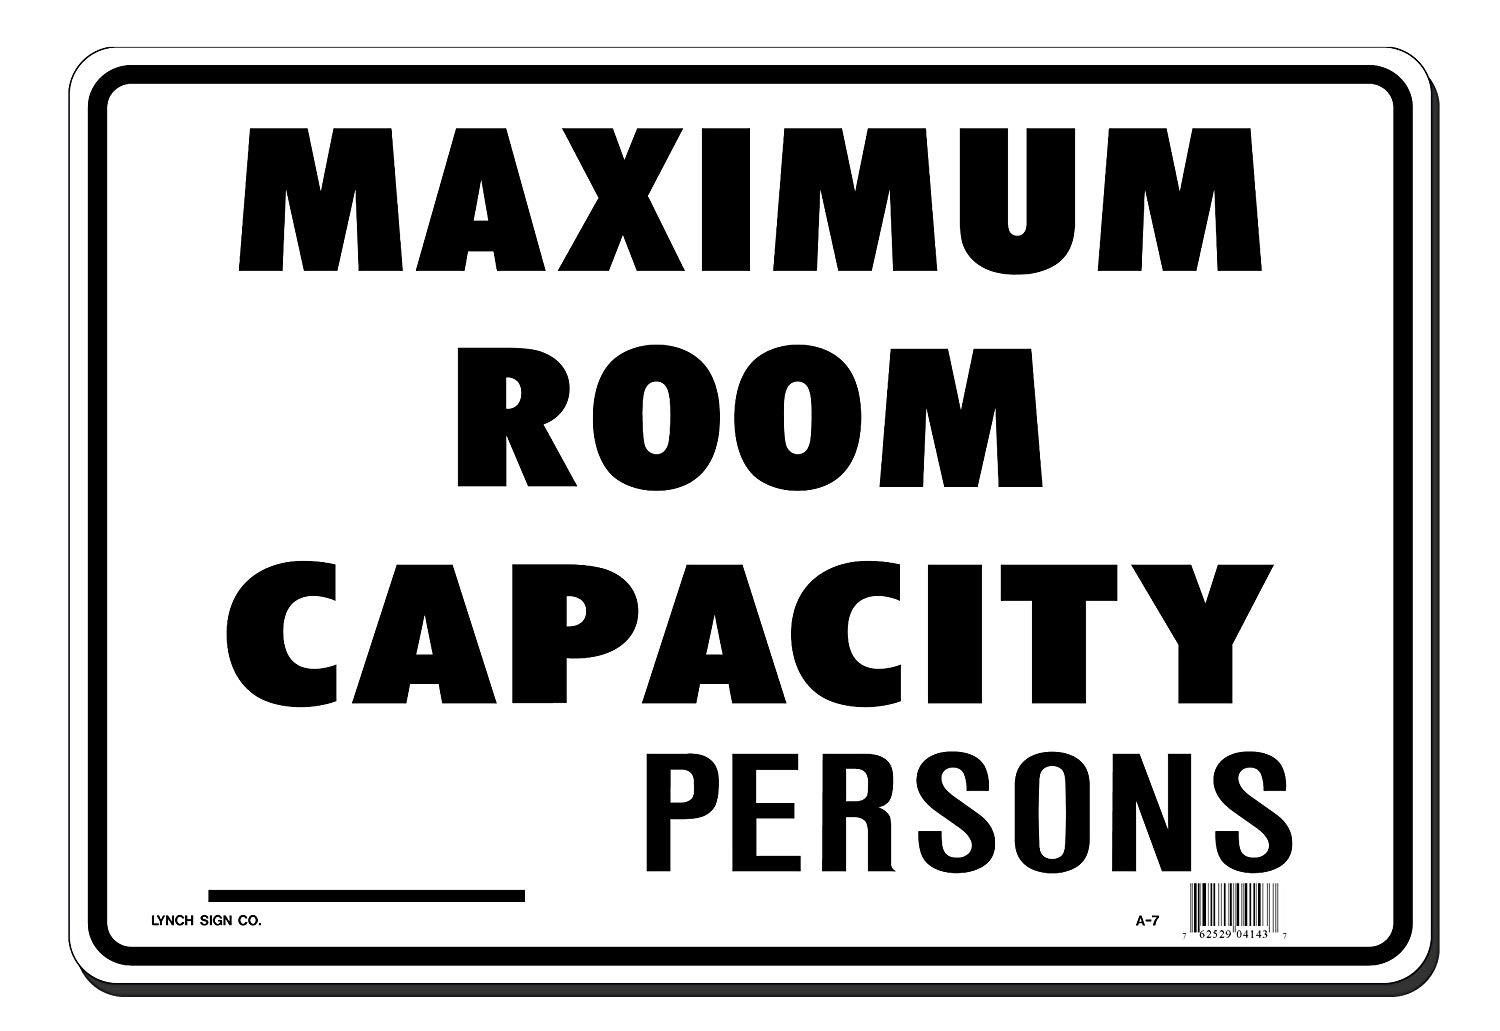 Lynch A-7 14" x 10" Maximum Room Capacity _____ Persons